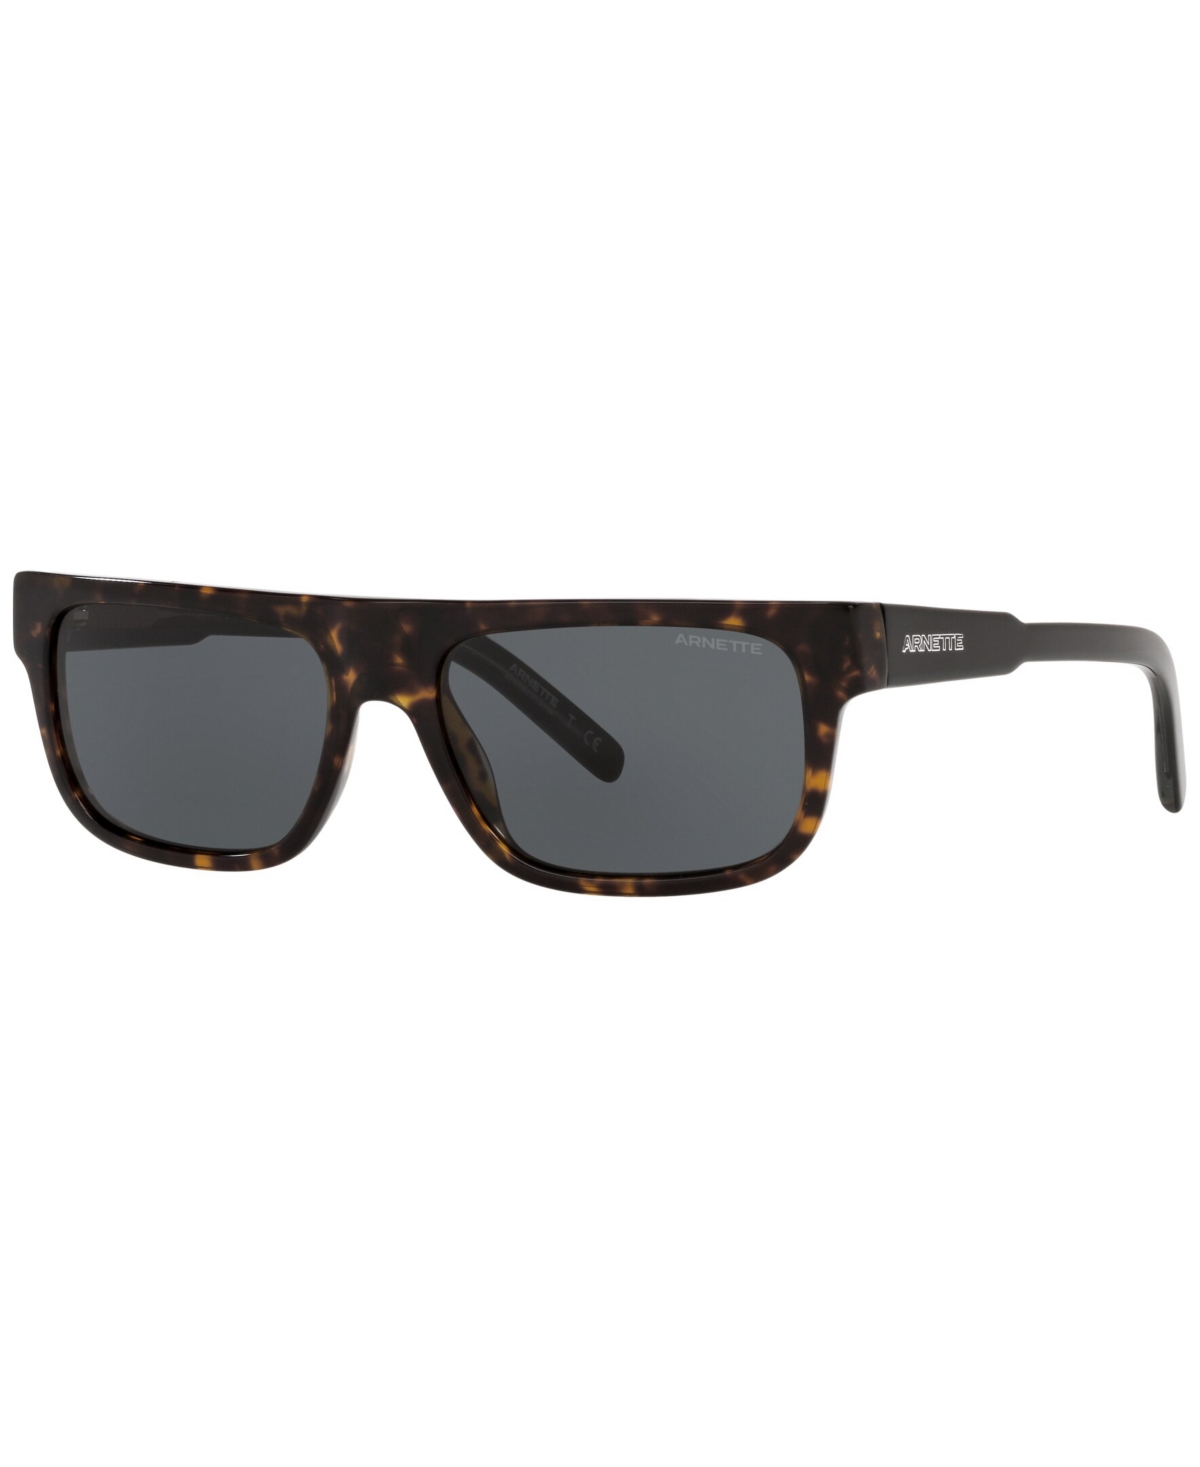 Men's Gothboy Sunglasses, AN4278 55 - Tortoise